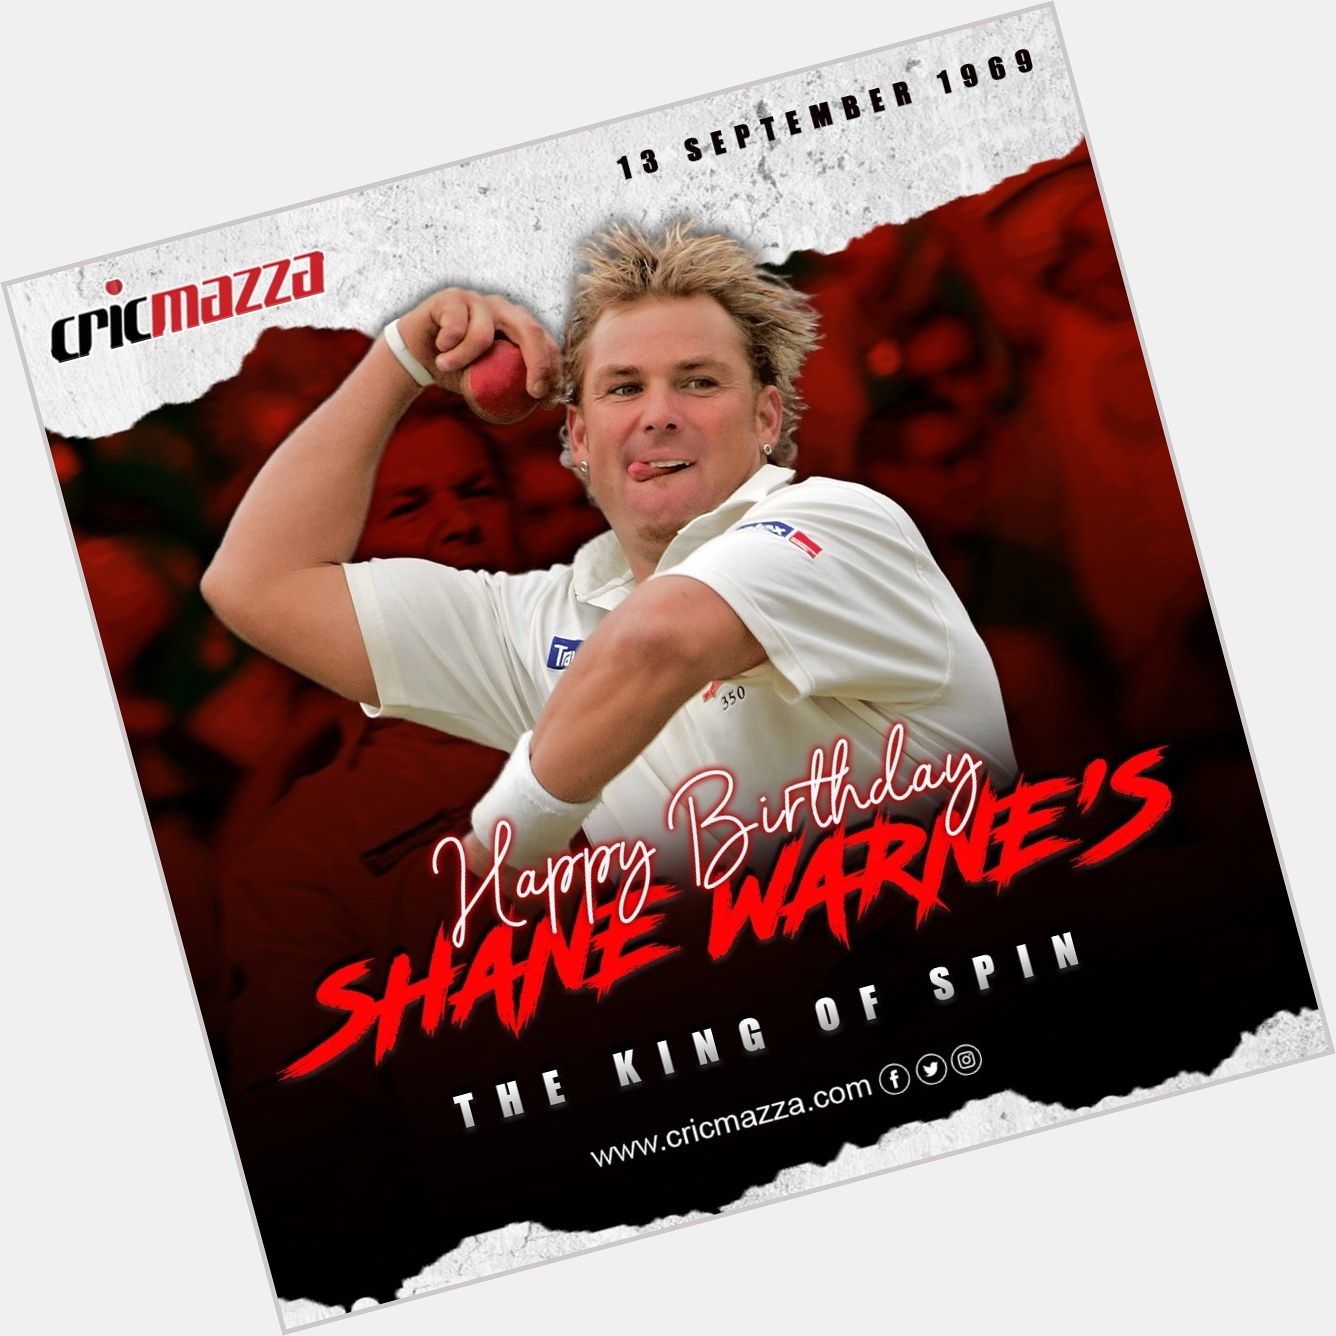 Cricmazza Wishes a very happy birthday Shane Warne   